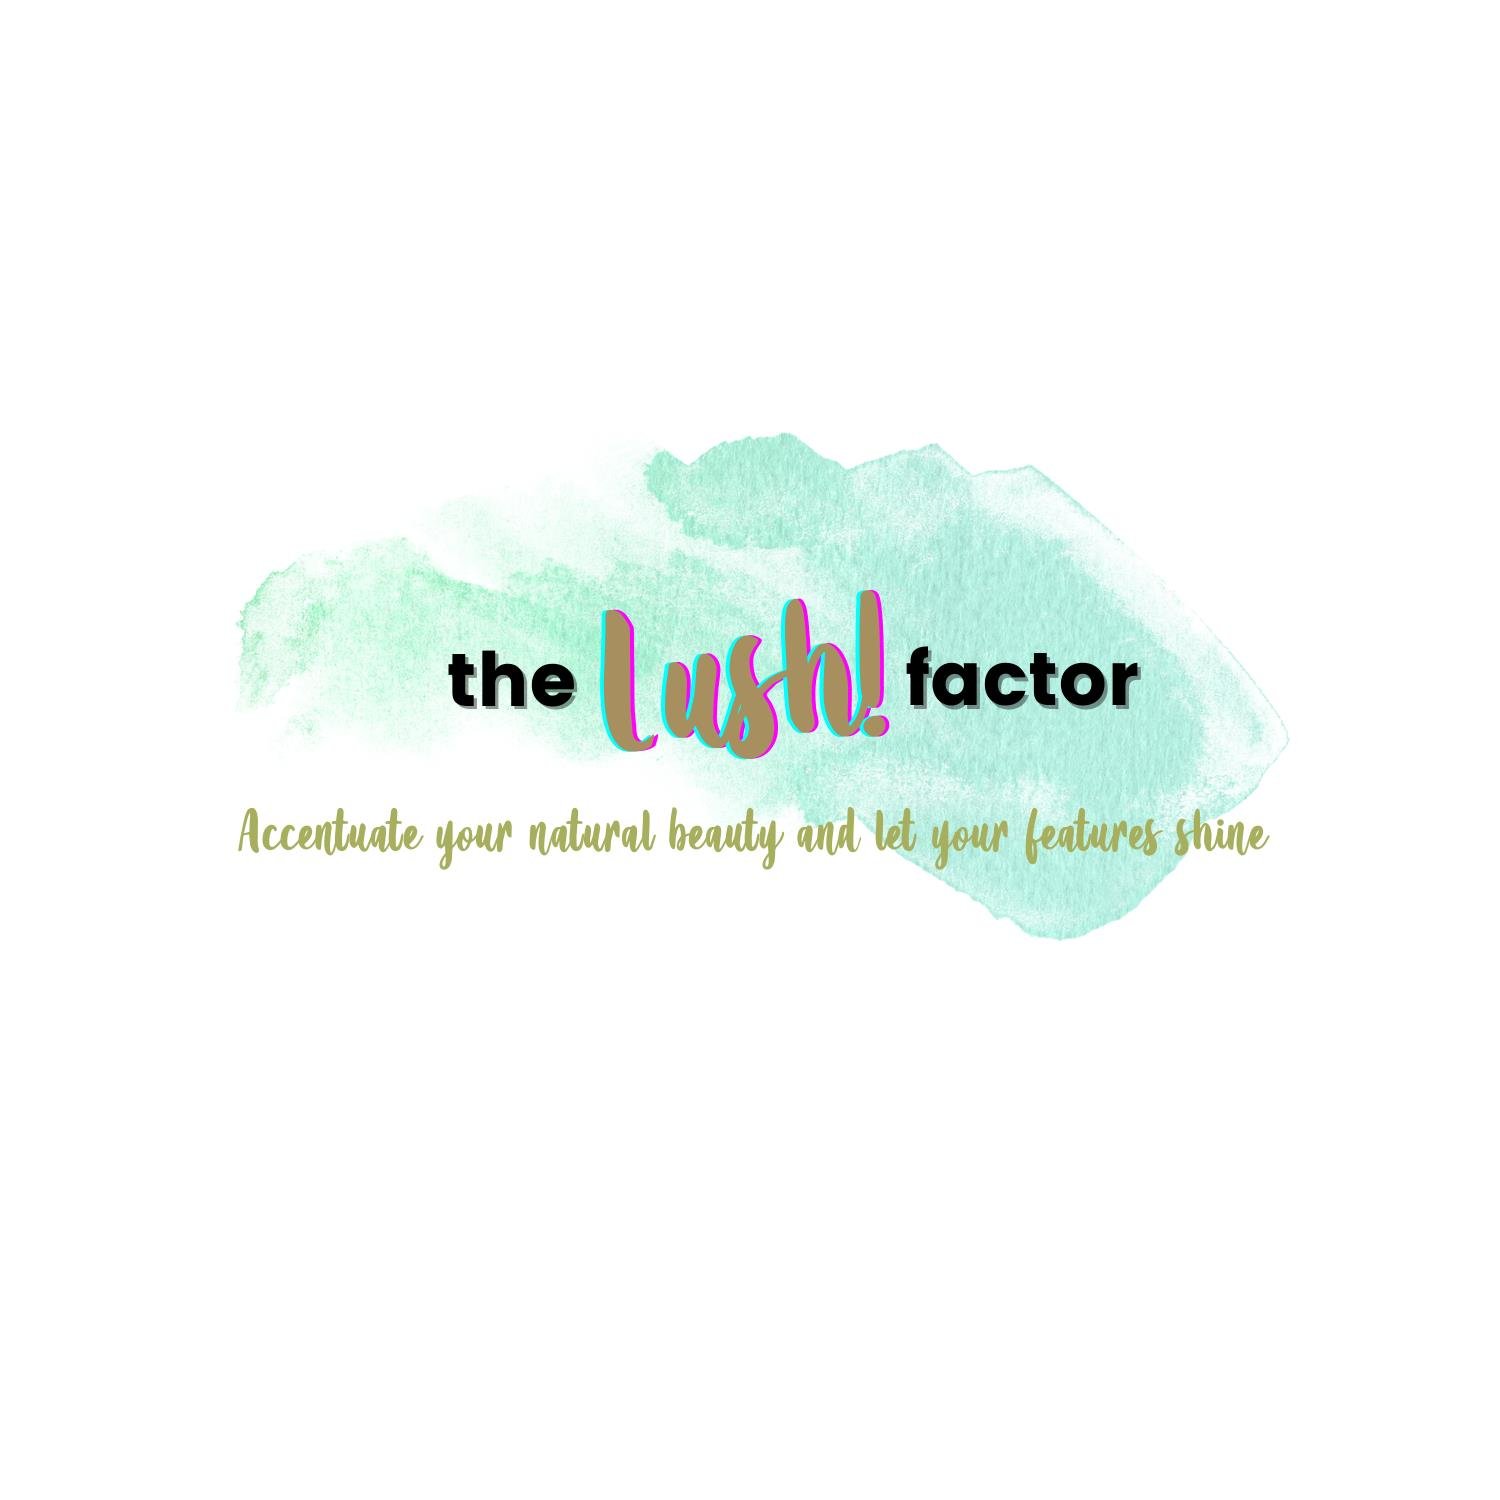 the lush! factor